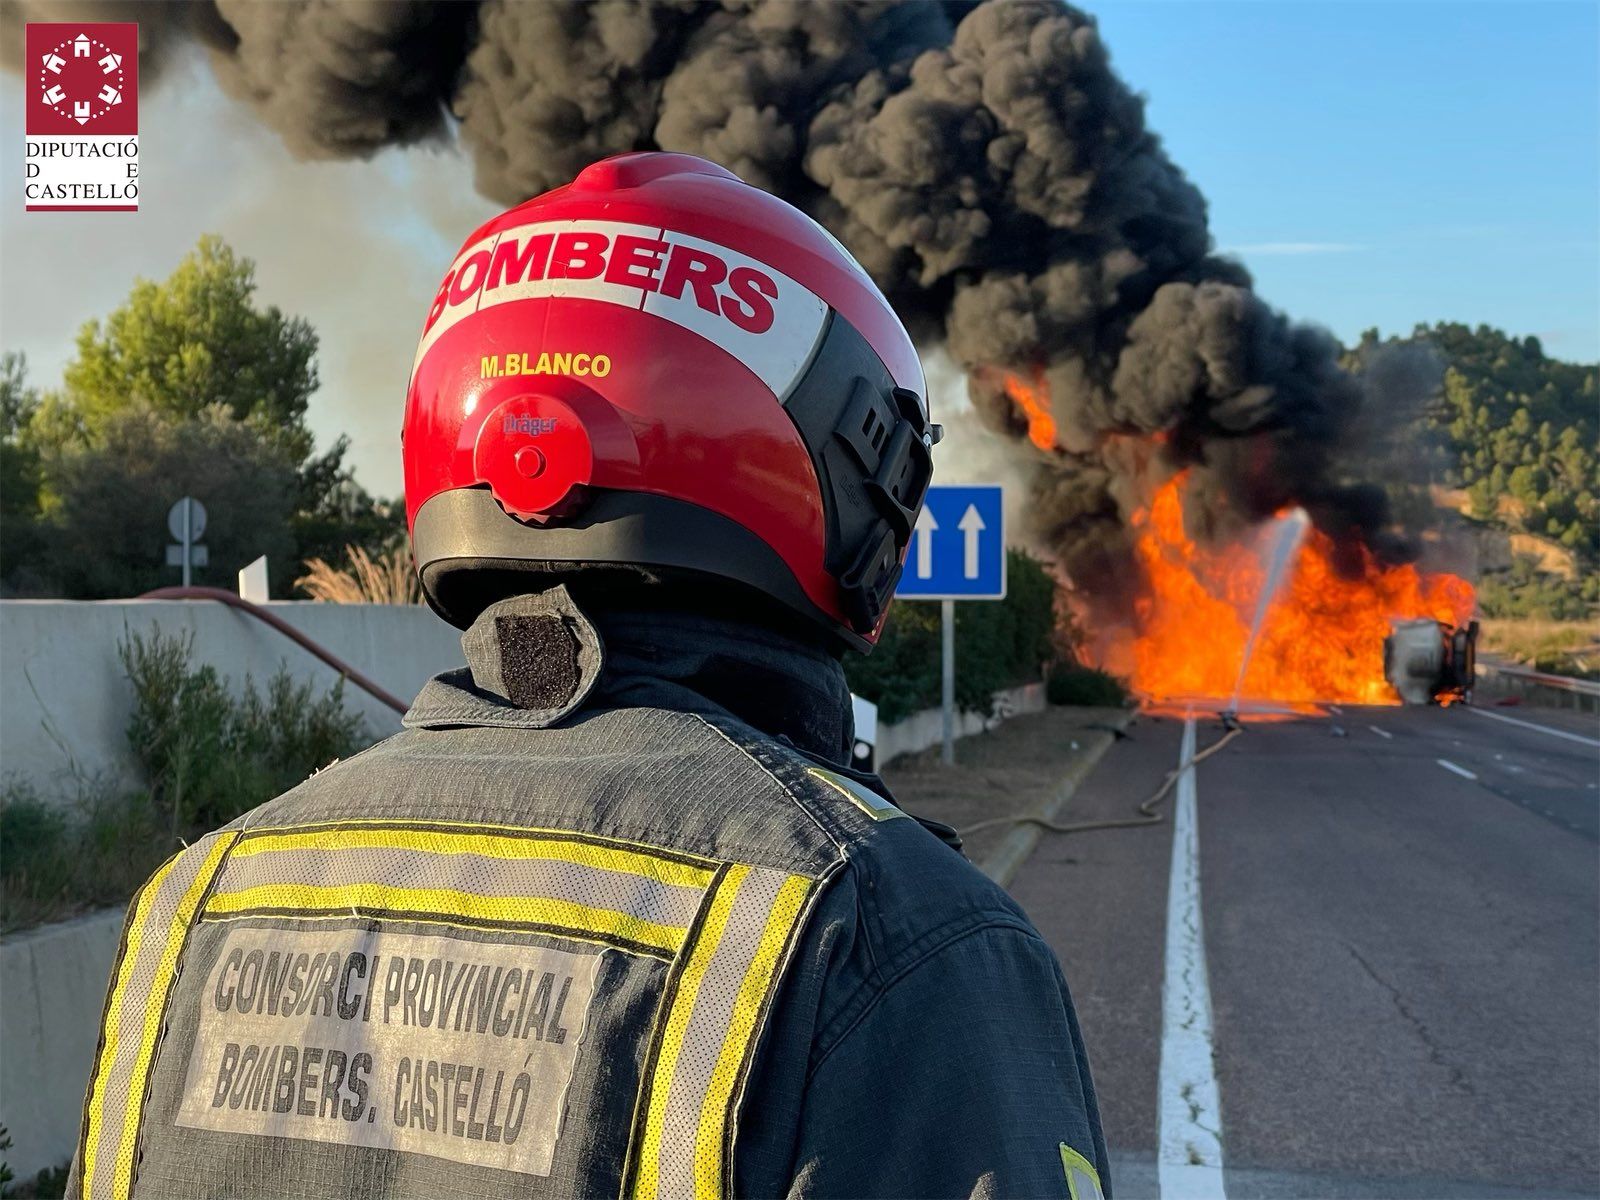 Un camión cargado de gasoil se incendia tras un accidente en Castellón